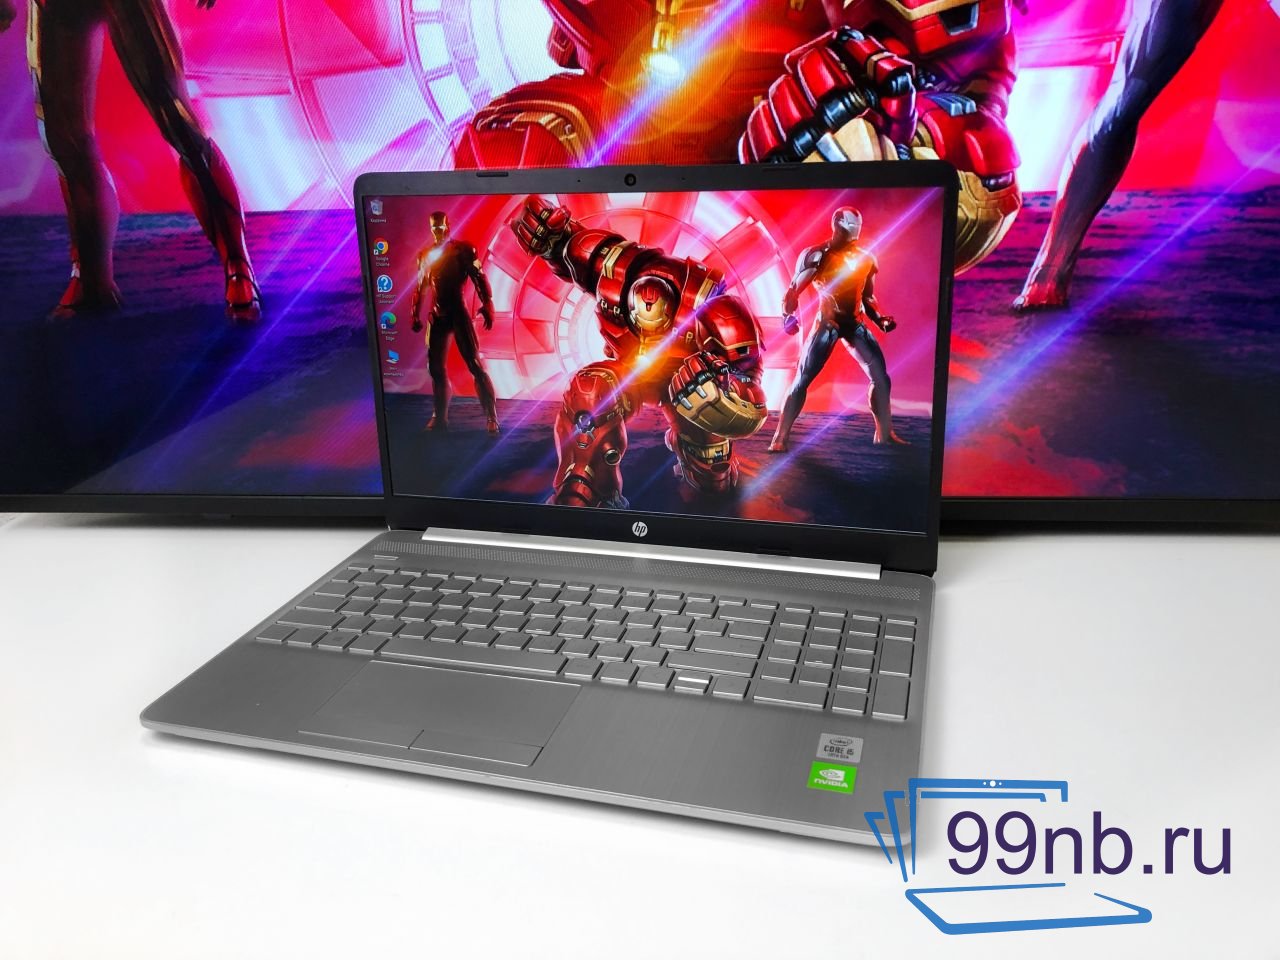  Игровой ноутбук HP на i5+Geforce+512 Gb SSD